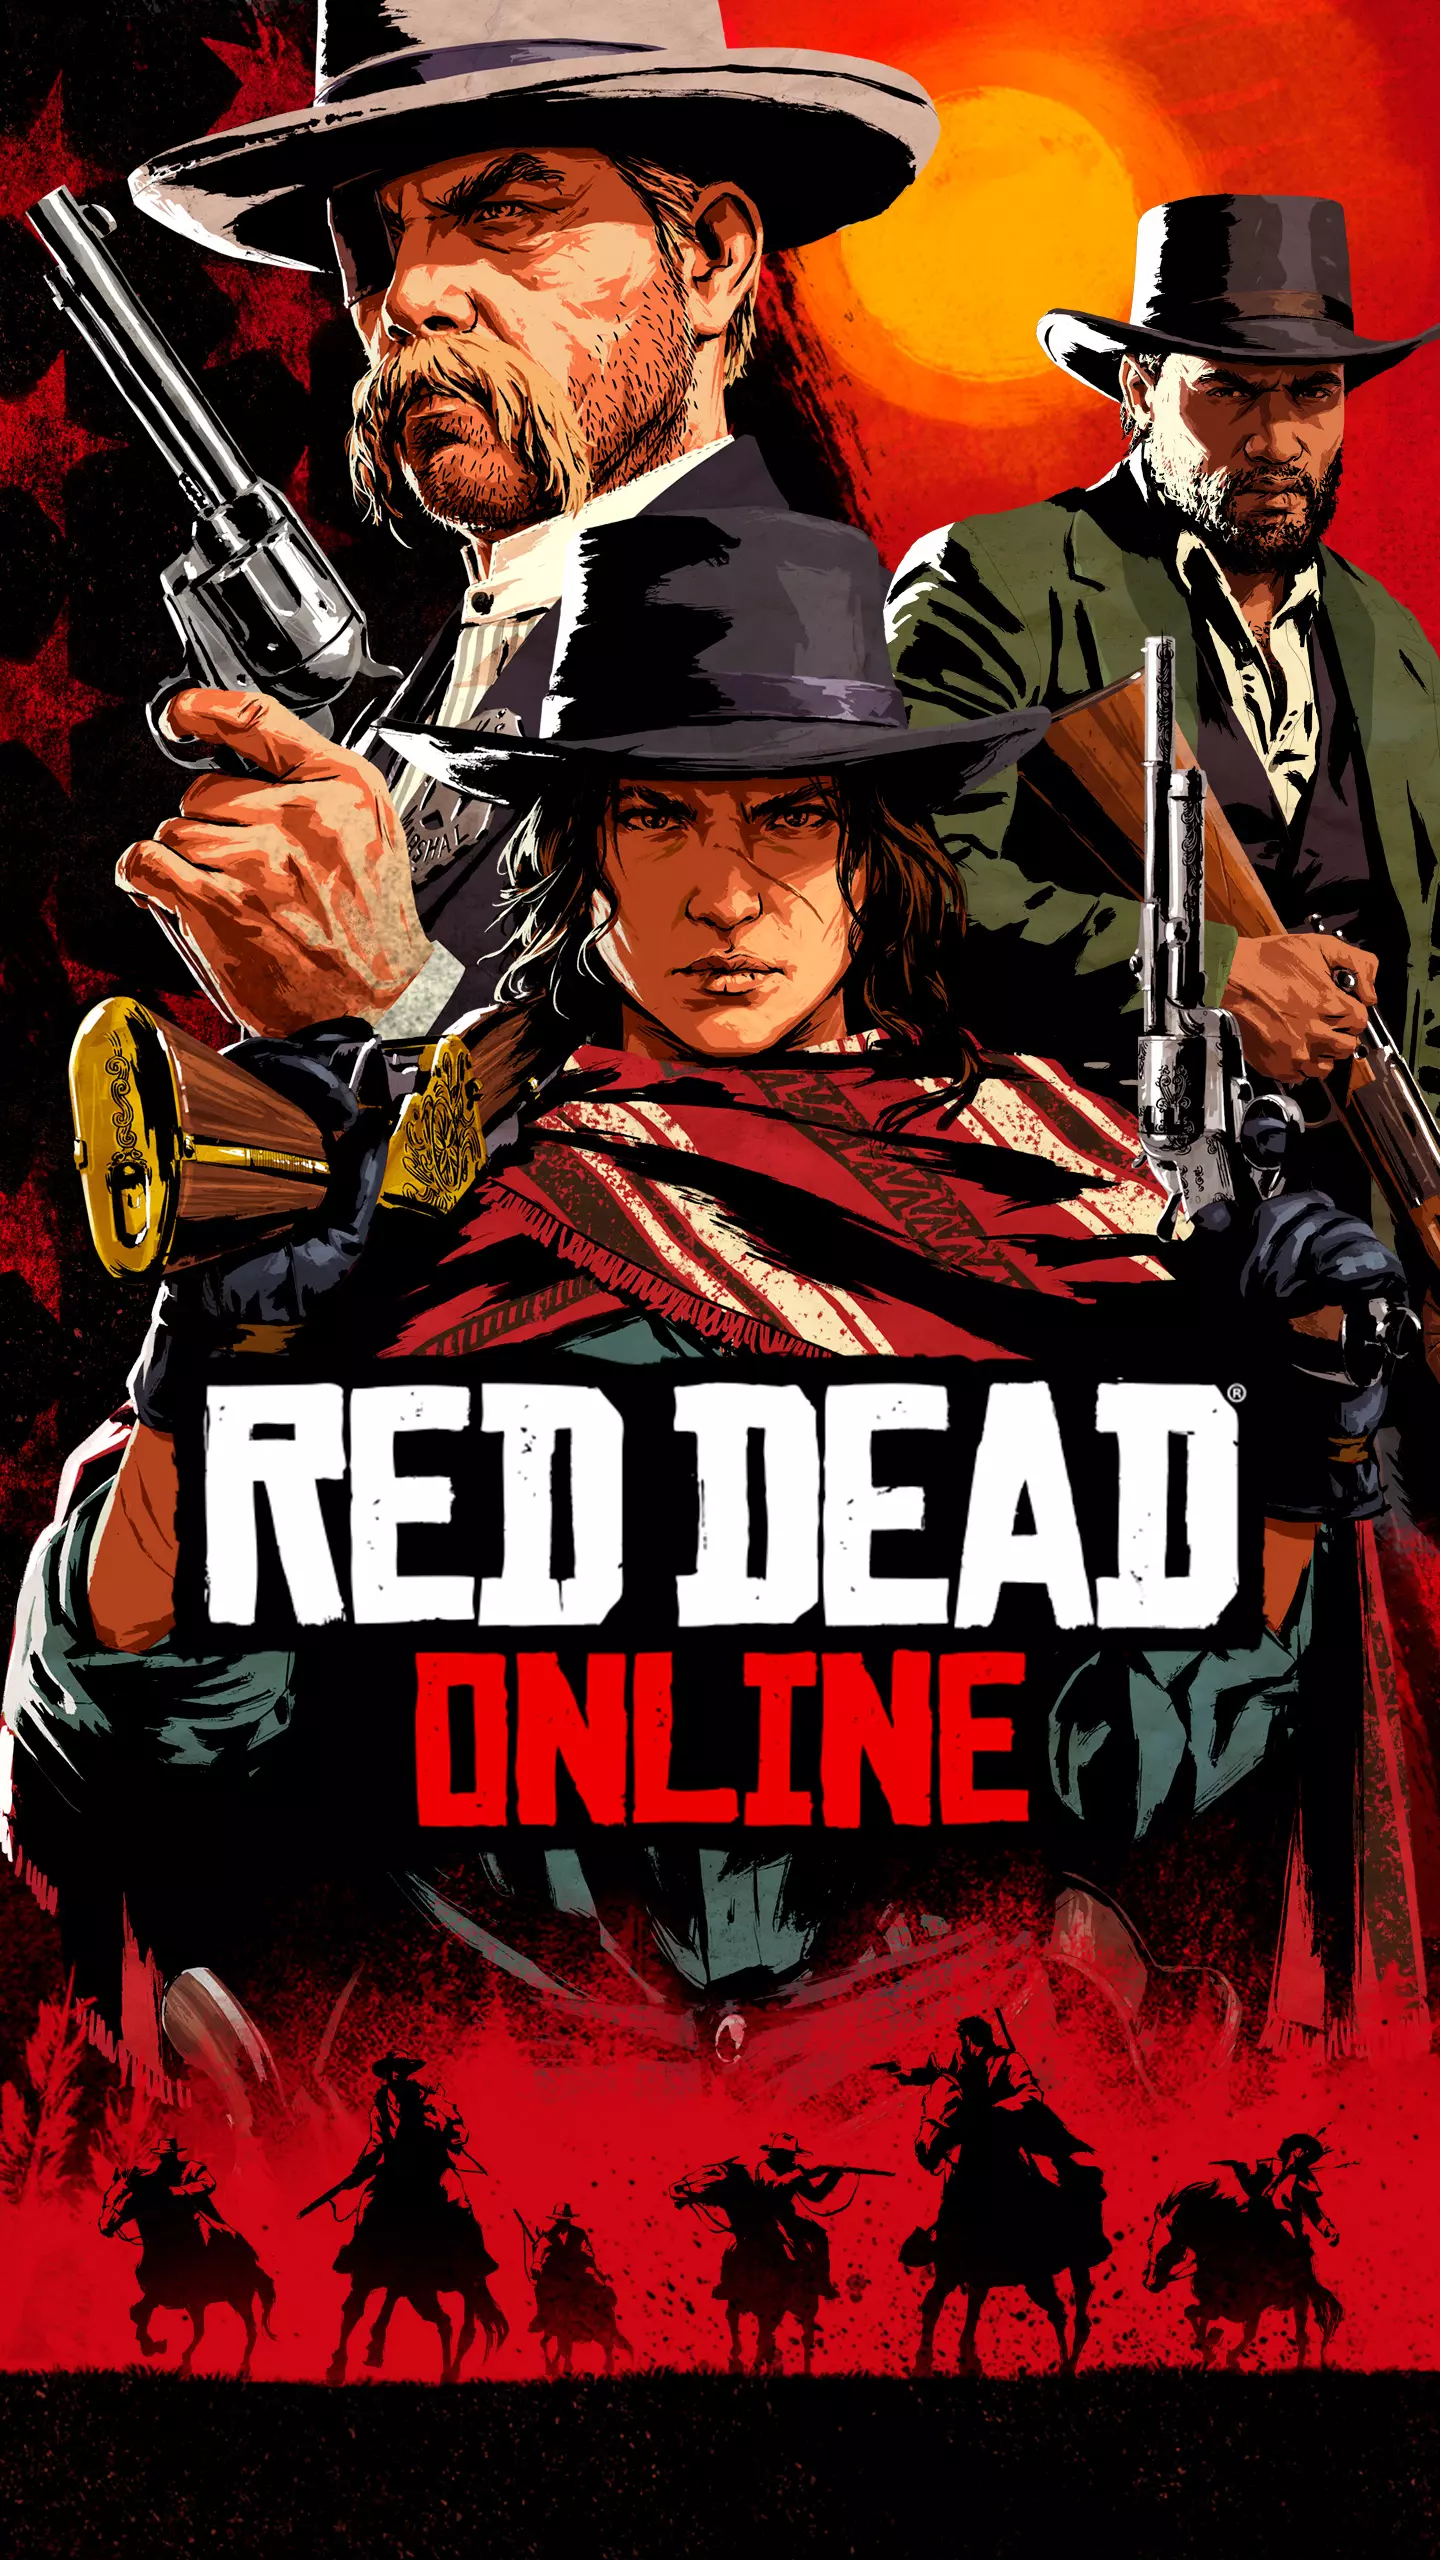 Red Dead Online - многопользовательская онлайн-приключенческая игра, разработанная и изданная Rockstar Games как многопользовательский компонент Red Dead Redemption 2.